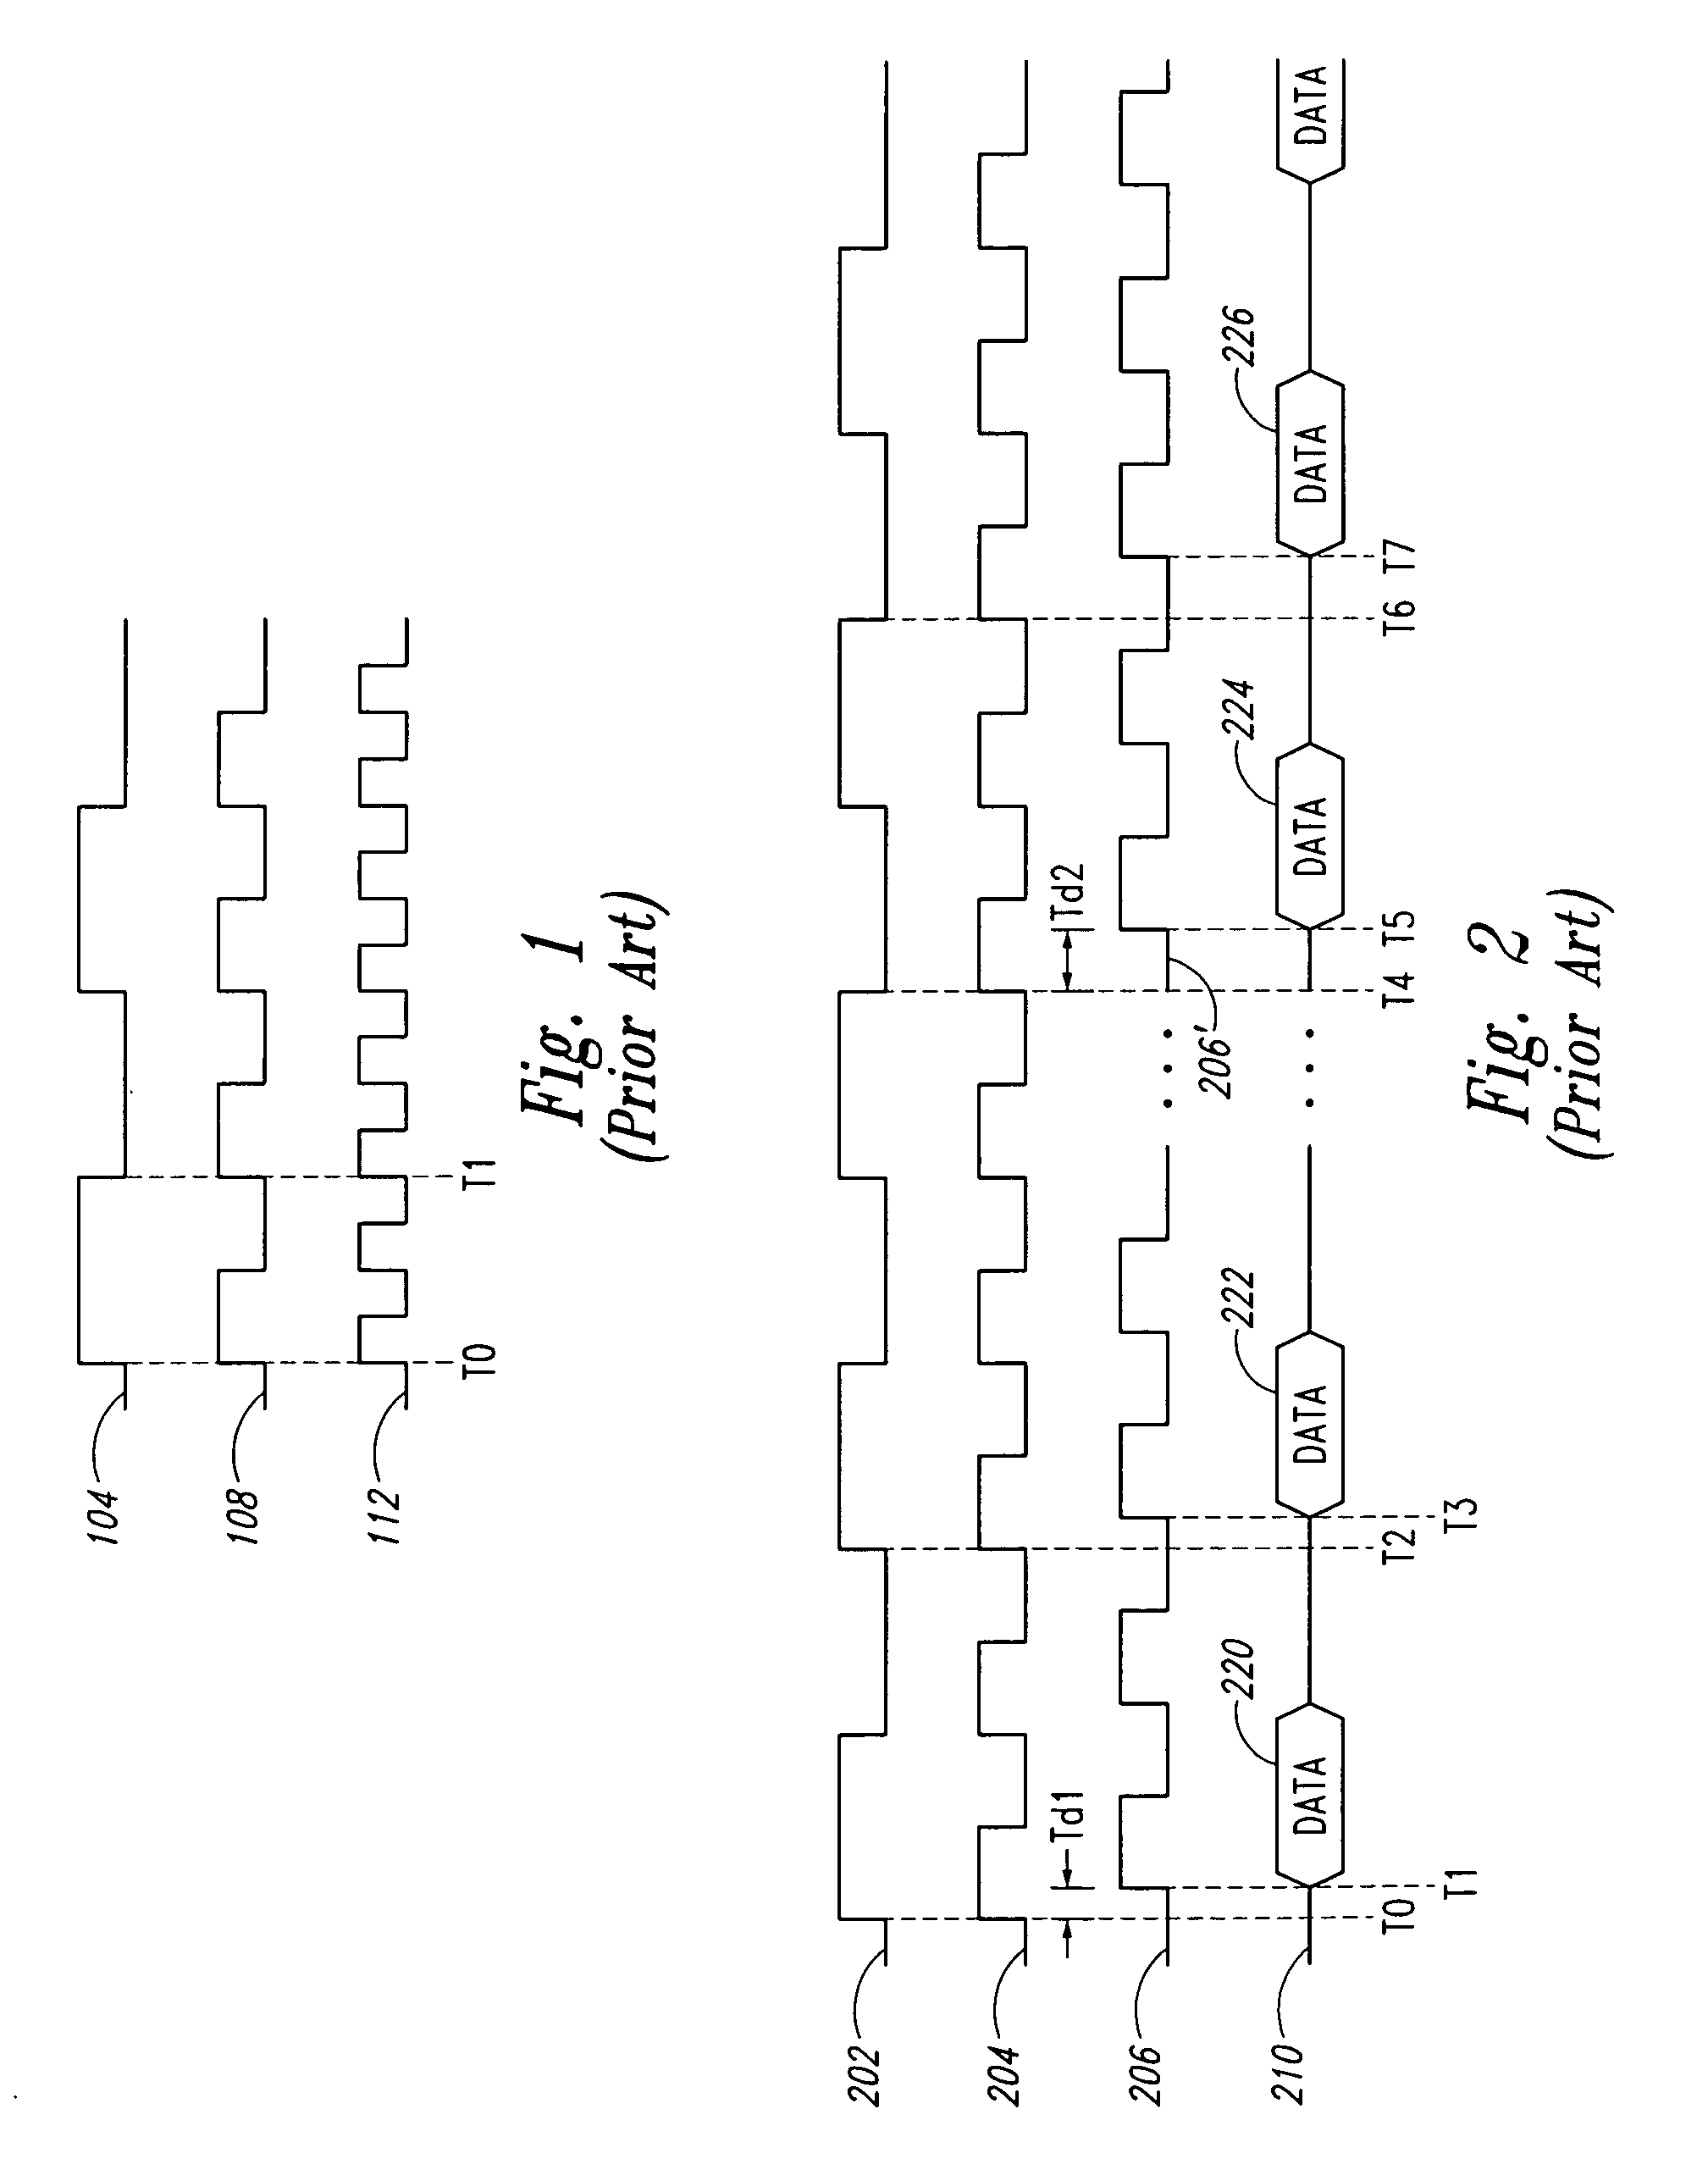 Delay line synchronizer apparatus and method